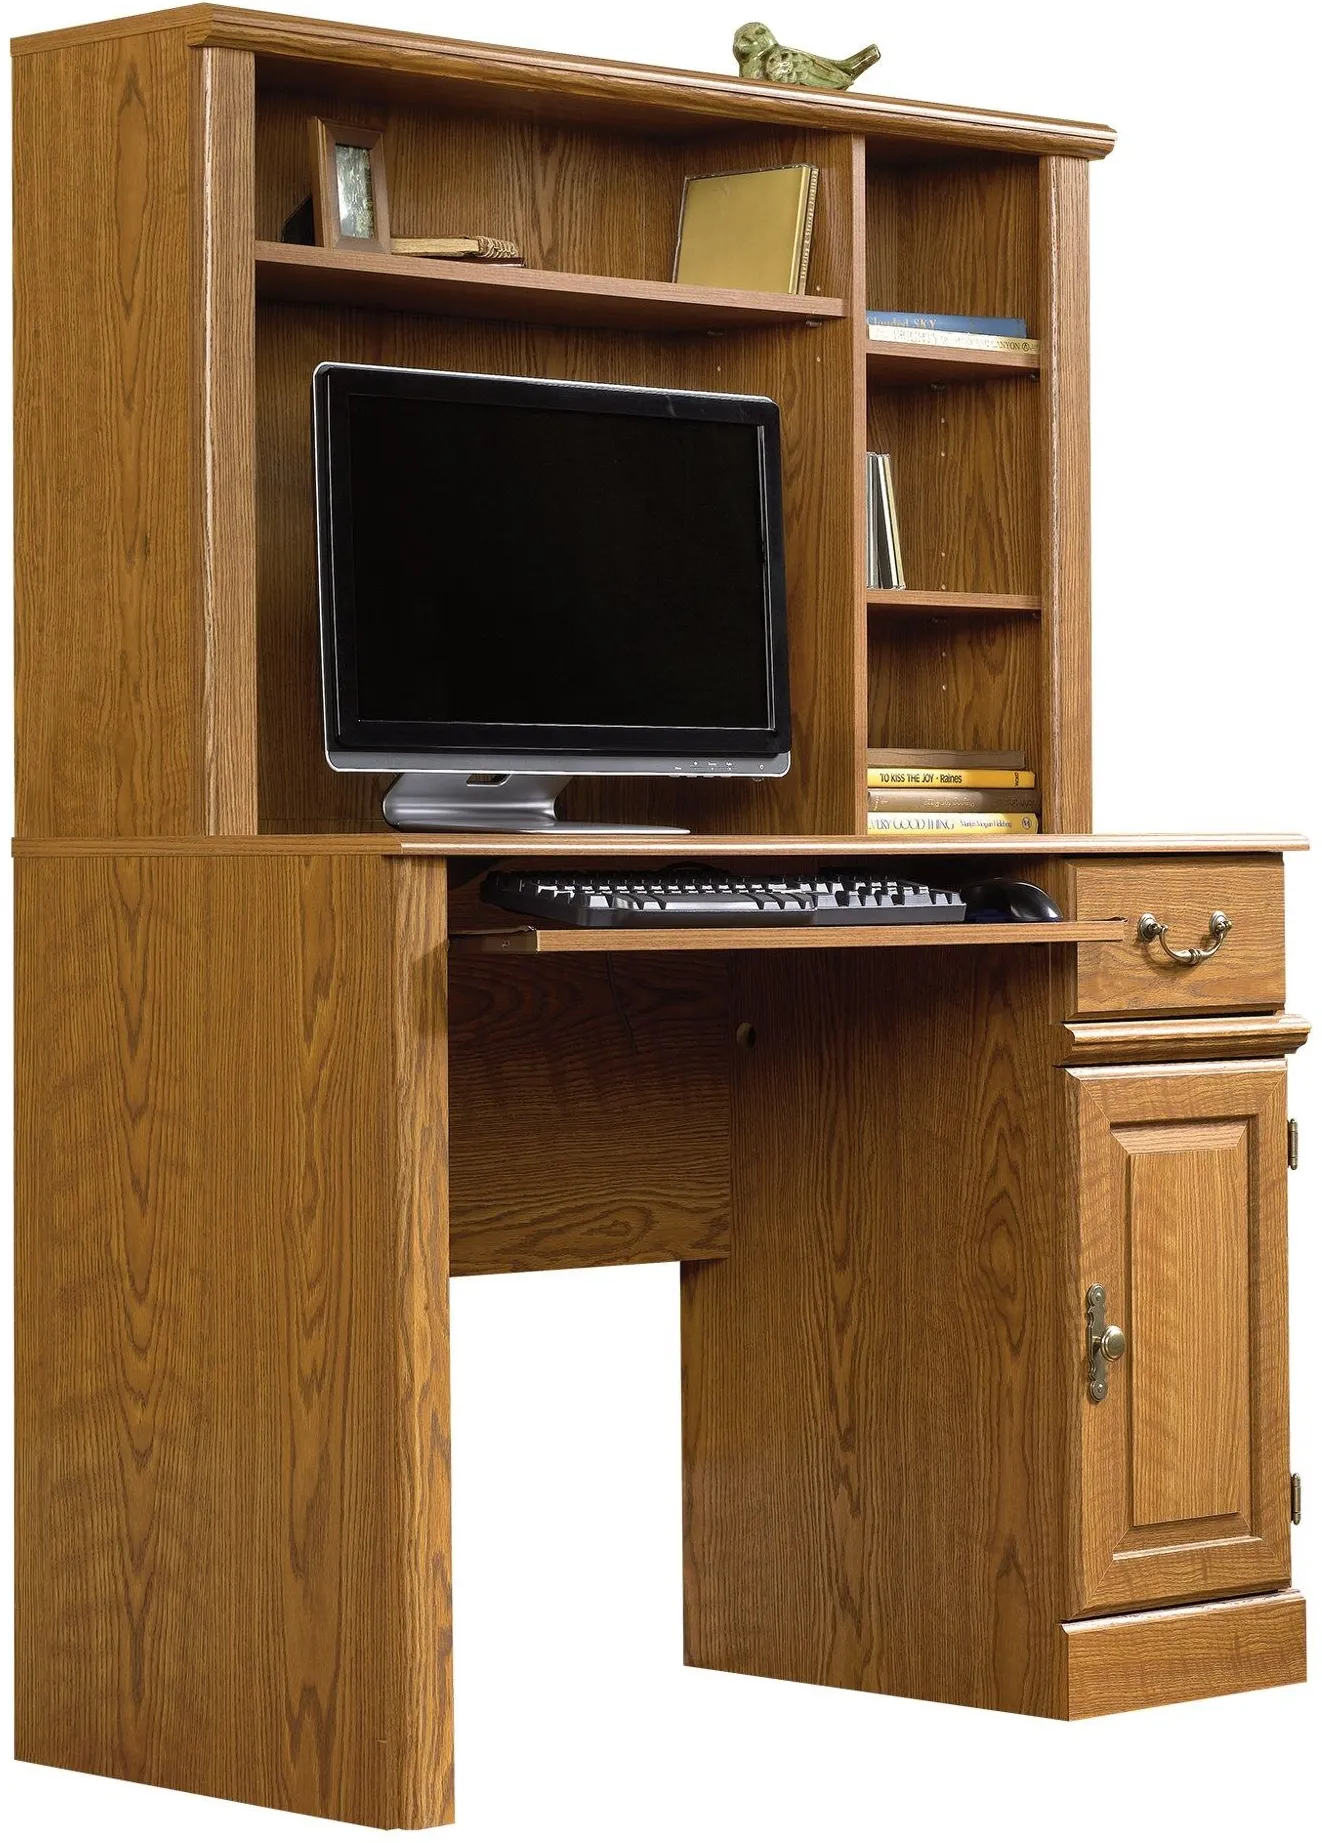 Sauder® Orchard Hills® Carolina Oak® Computer Desk with Hutch